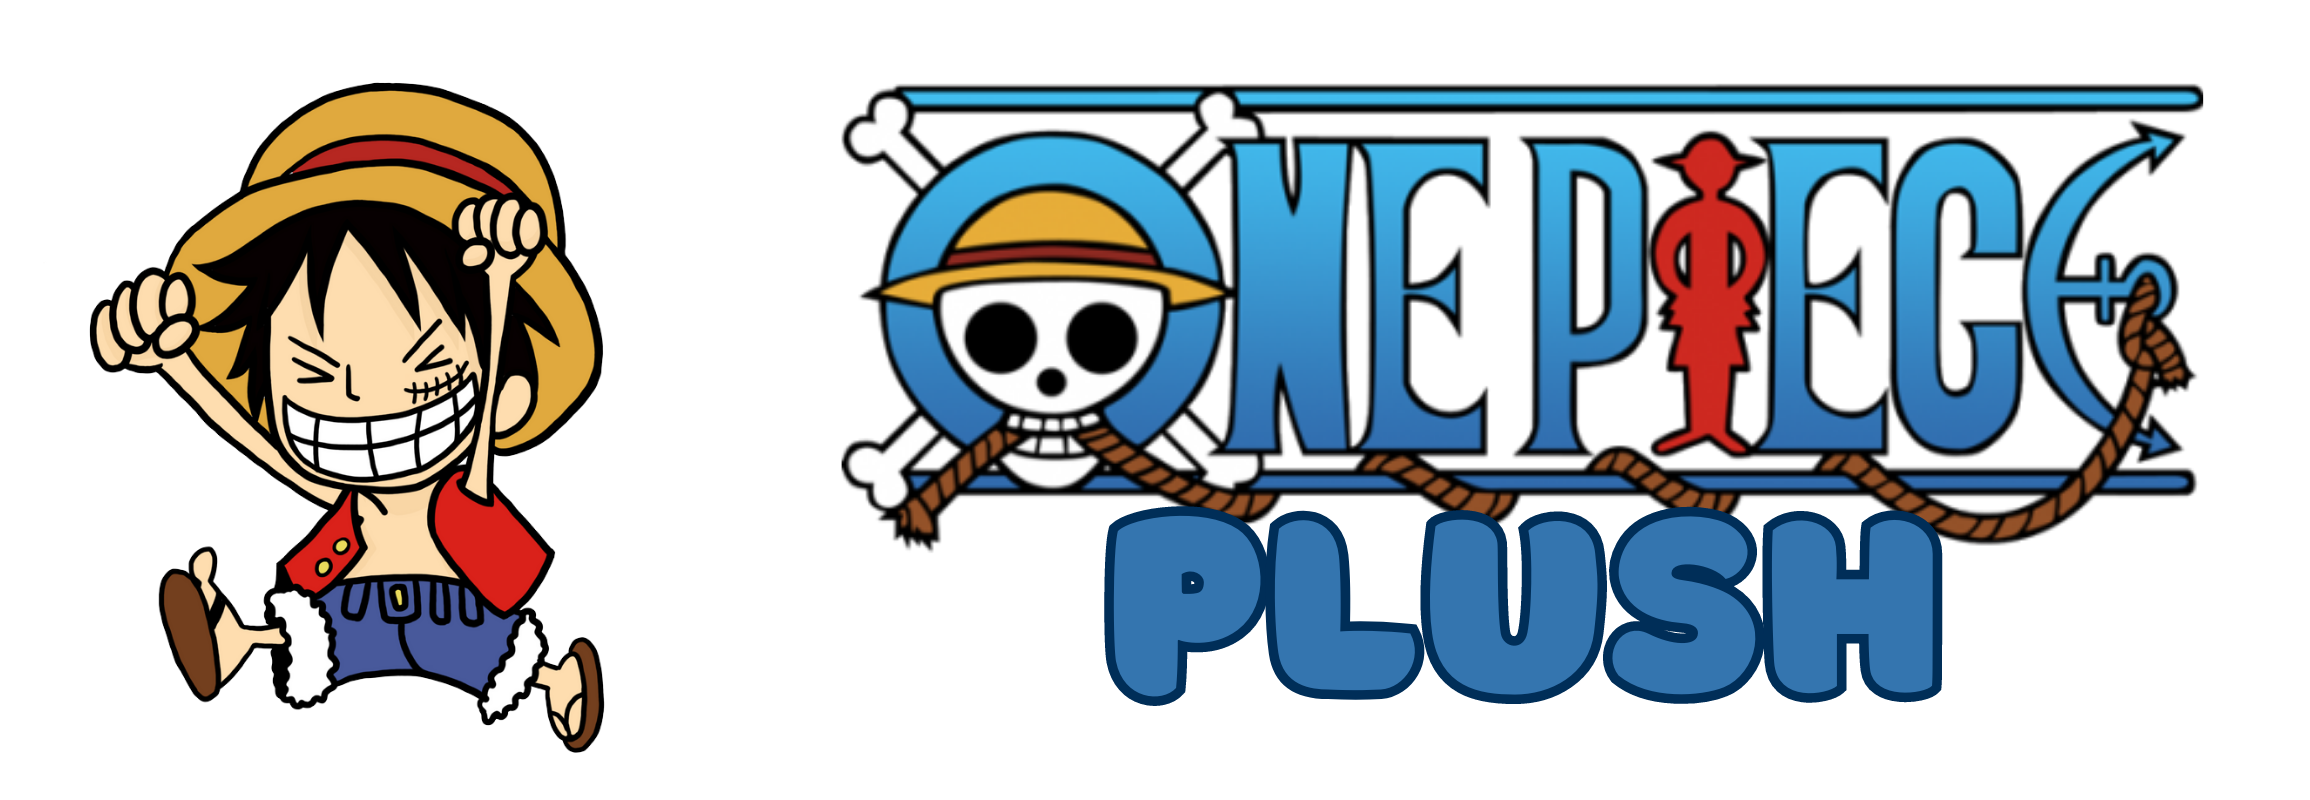 28 - One Piece Plush